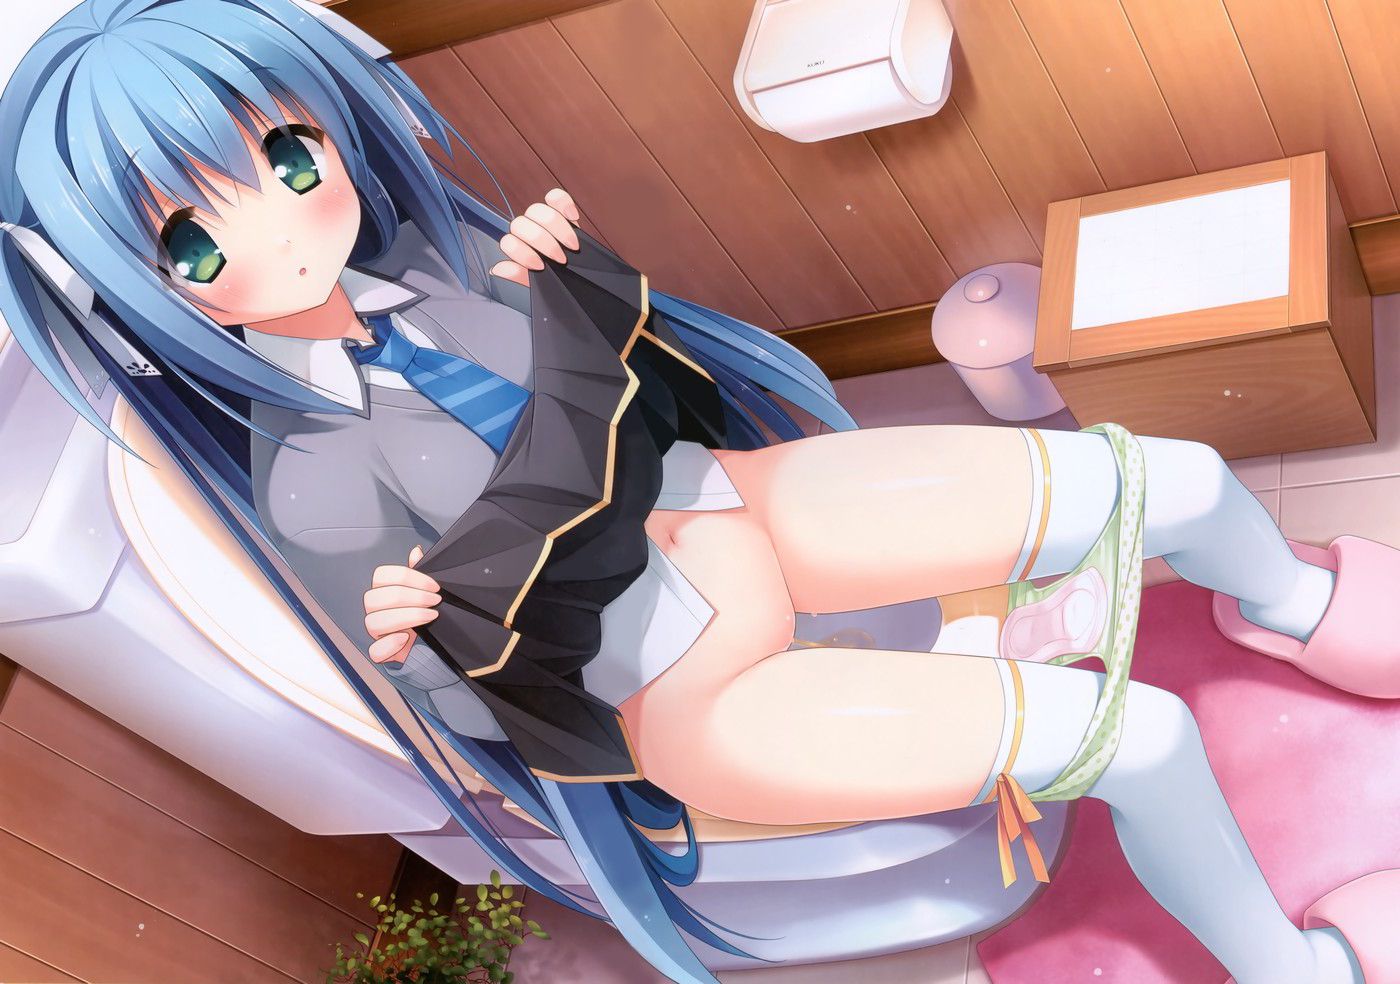 Erotic anime summary Ikenai beautiful girls who will be erotic in the toilet [secondary erotic] 17